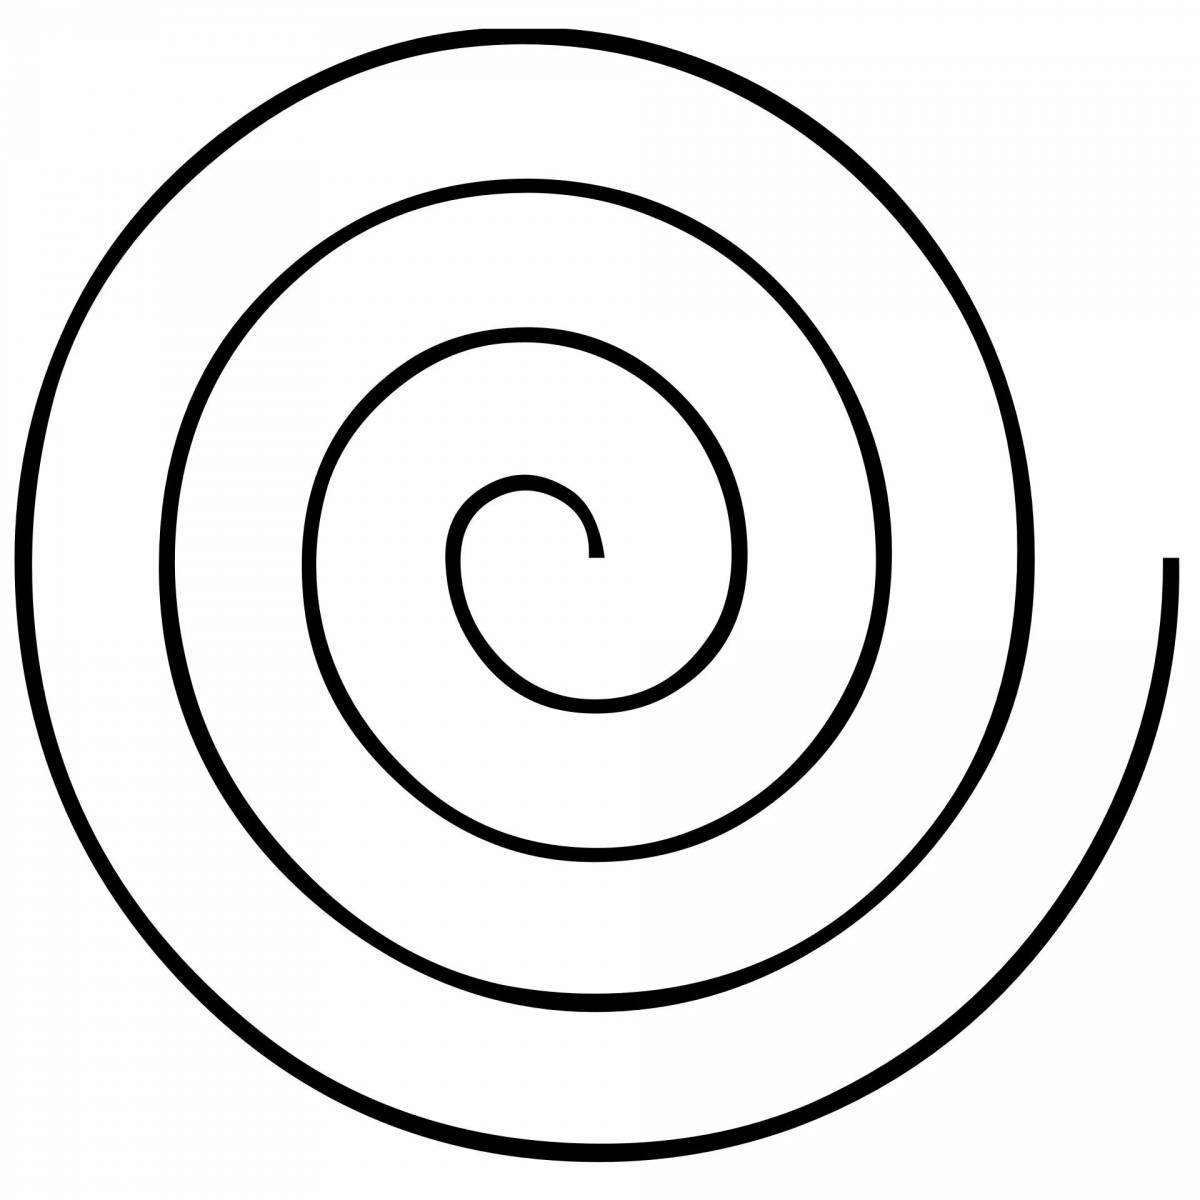 Drawing spiral #2